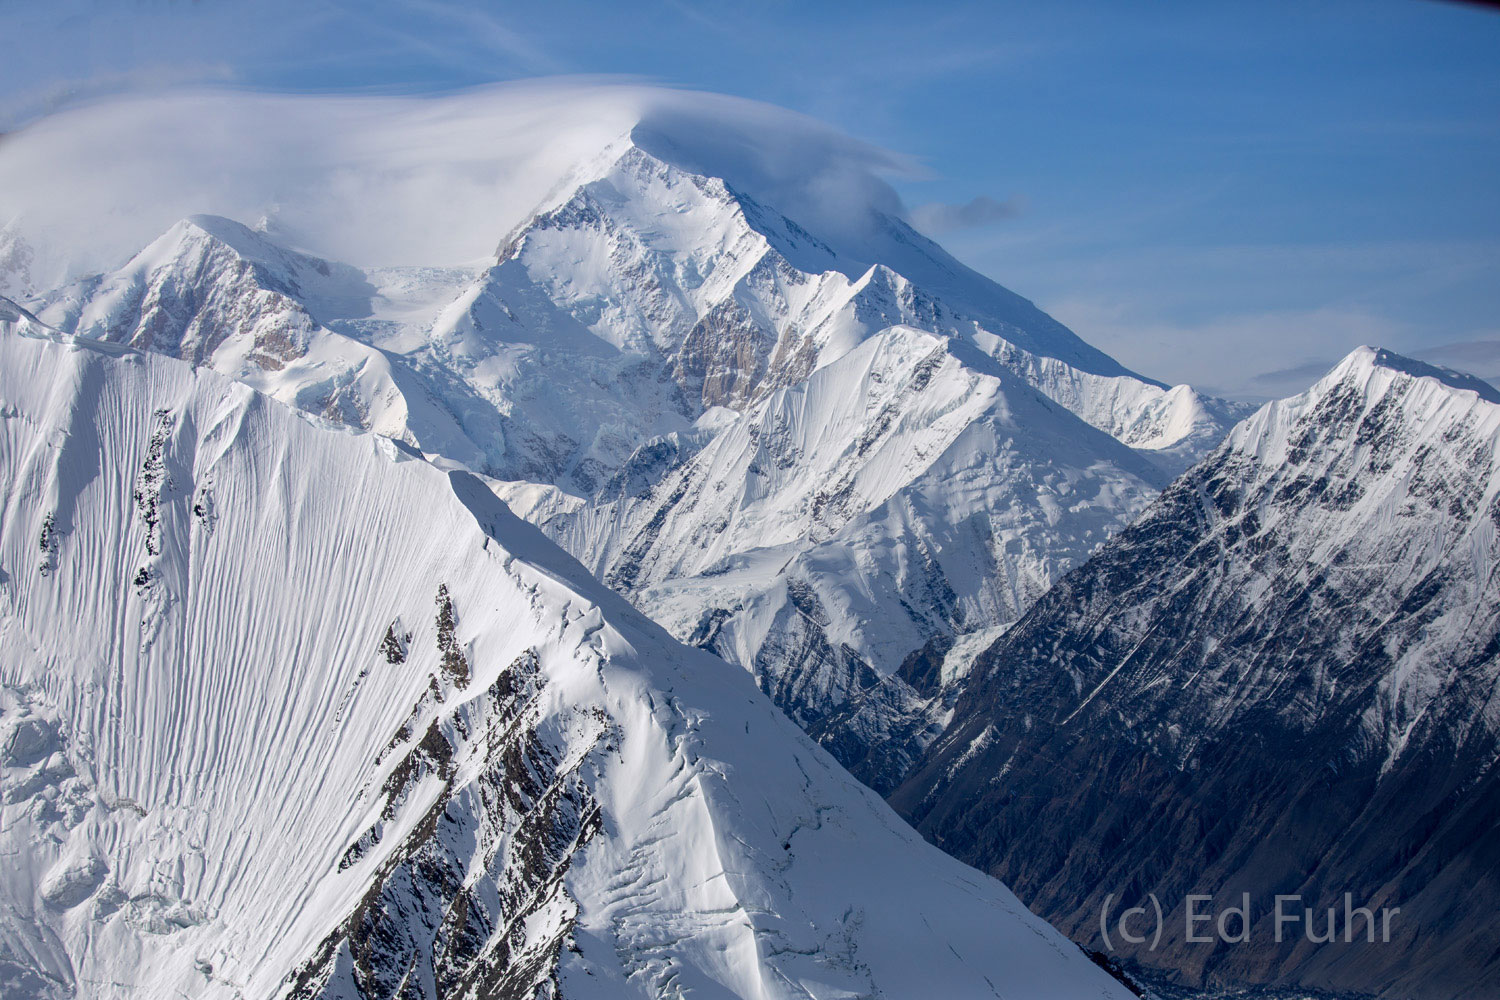 The peaks of Denali reach more than 20,000'